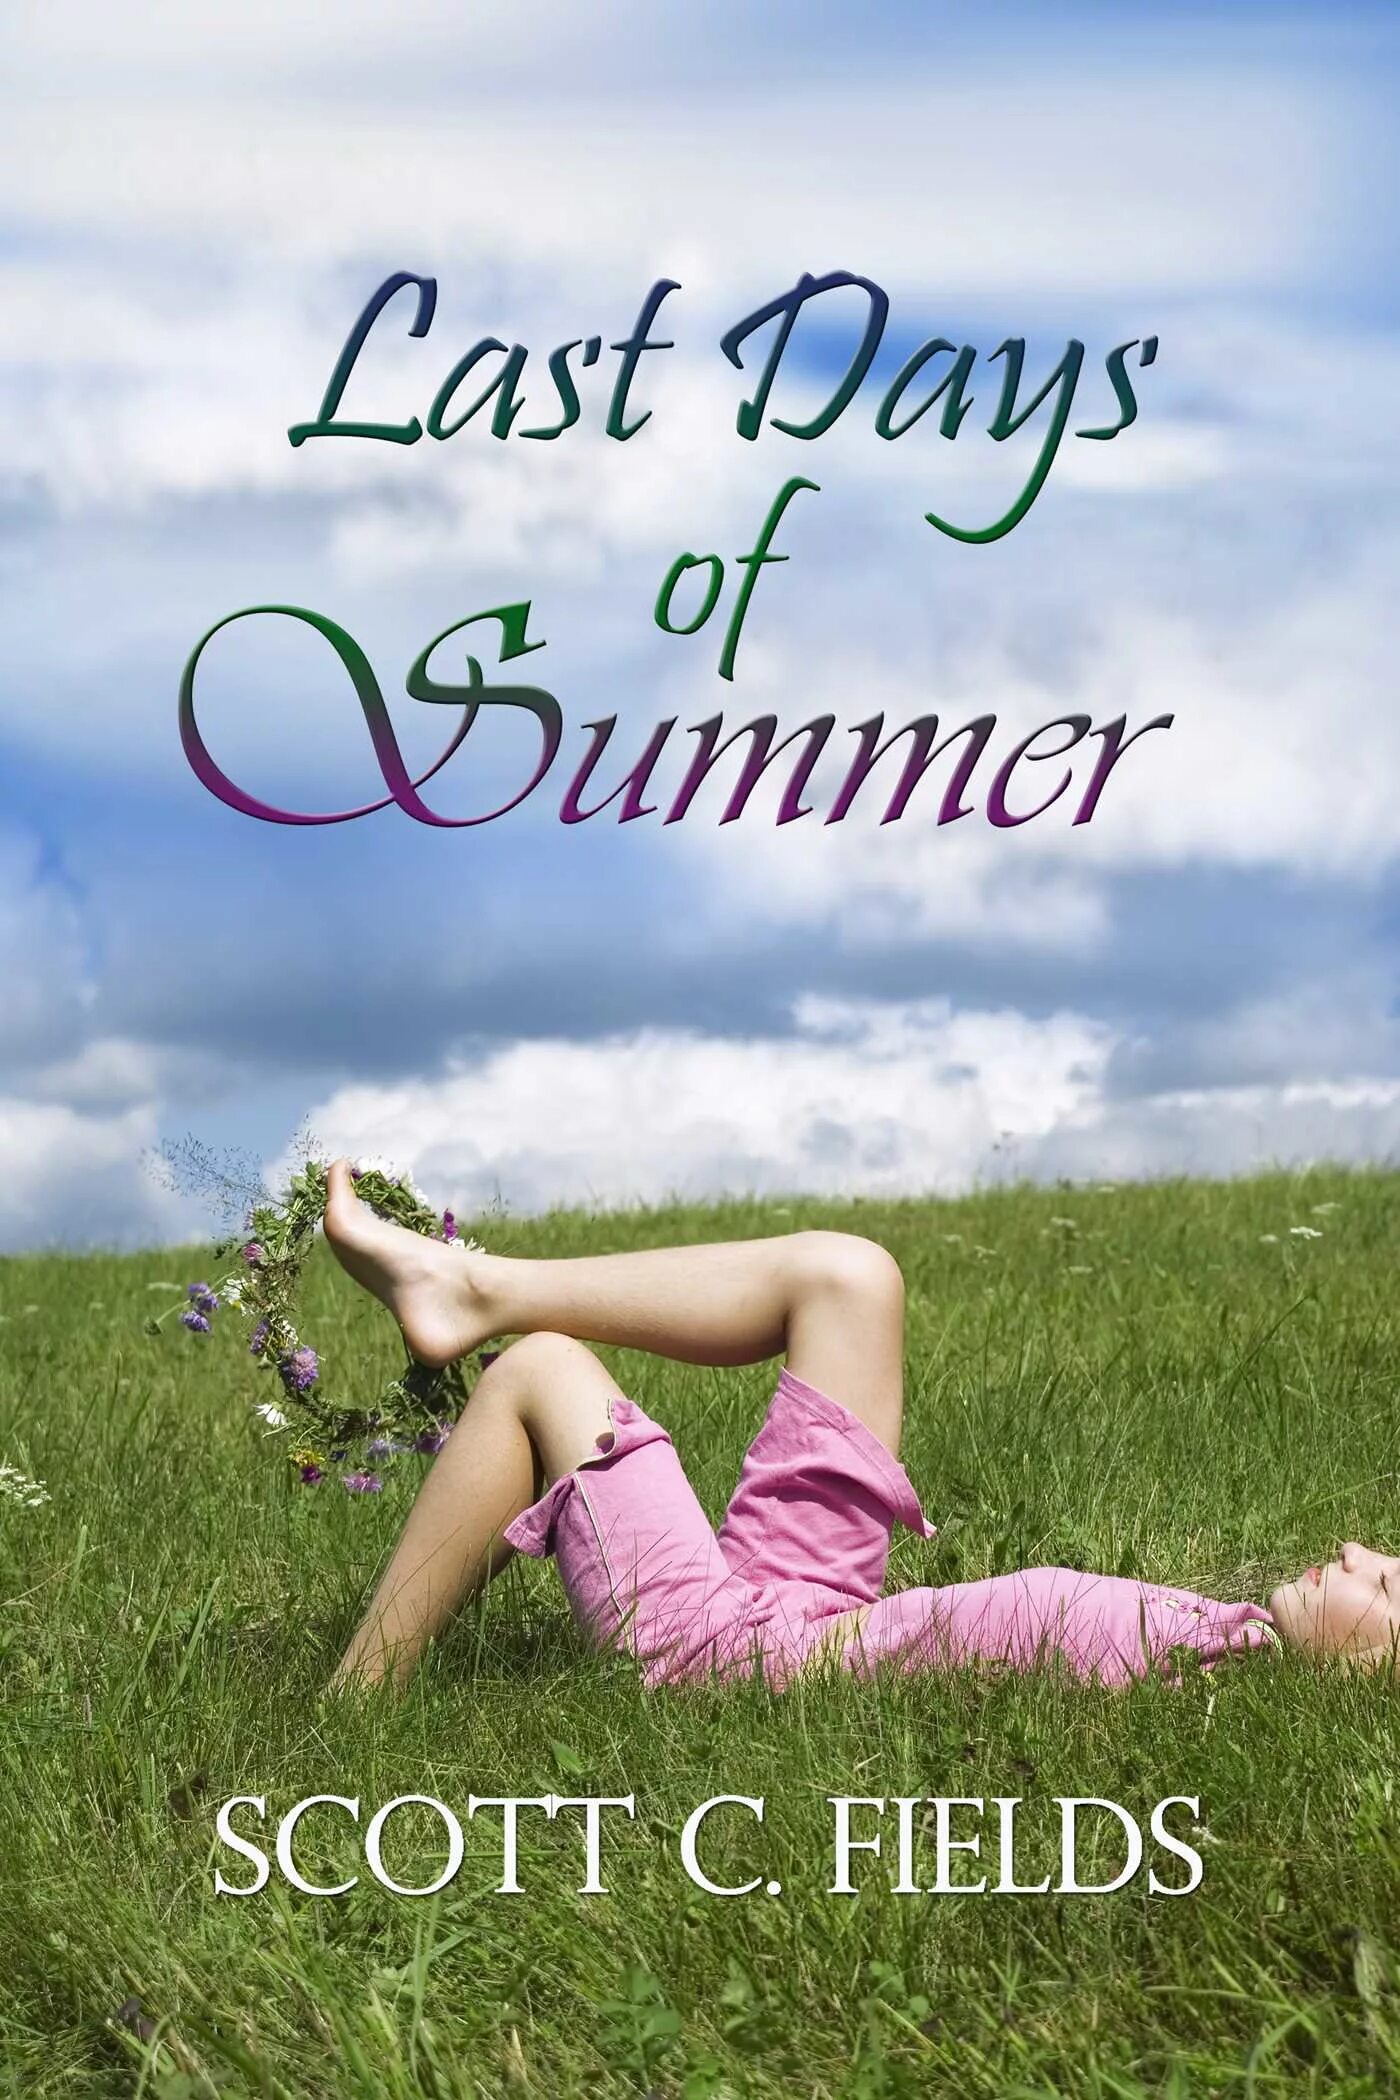 Sisters the last day. Last Day of Summer. The last Day of Summer книга. Сестры последний день лета.